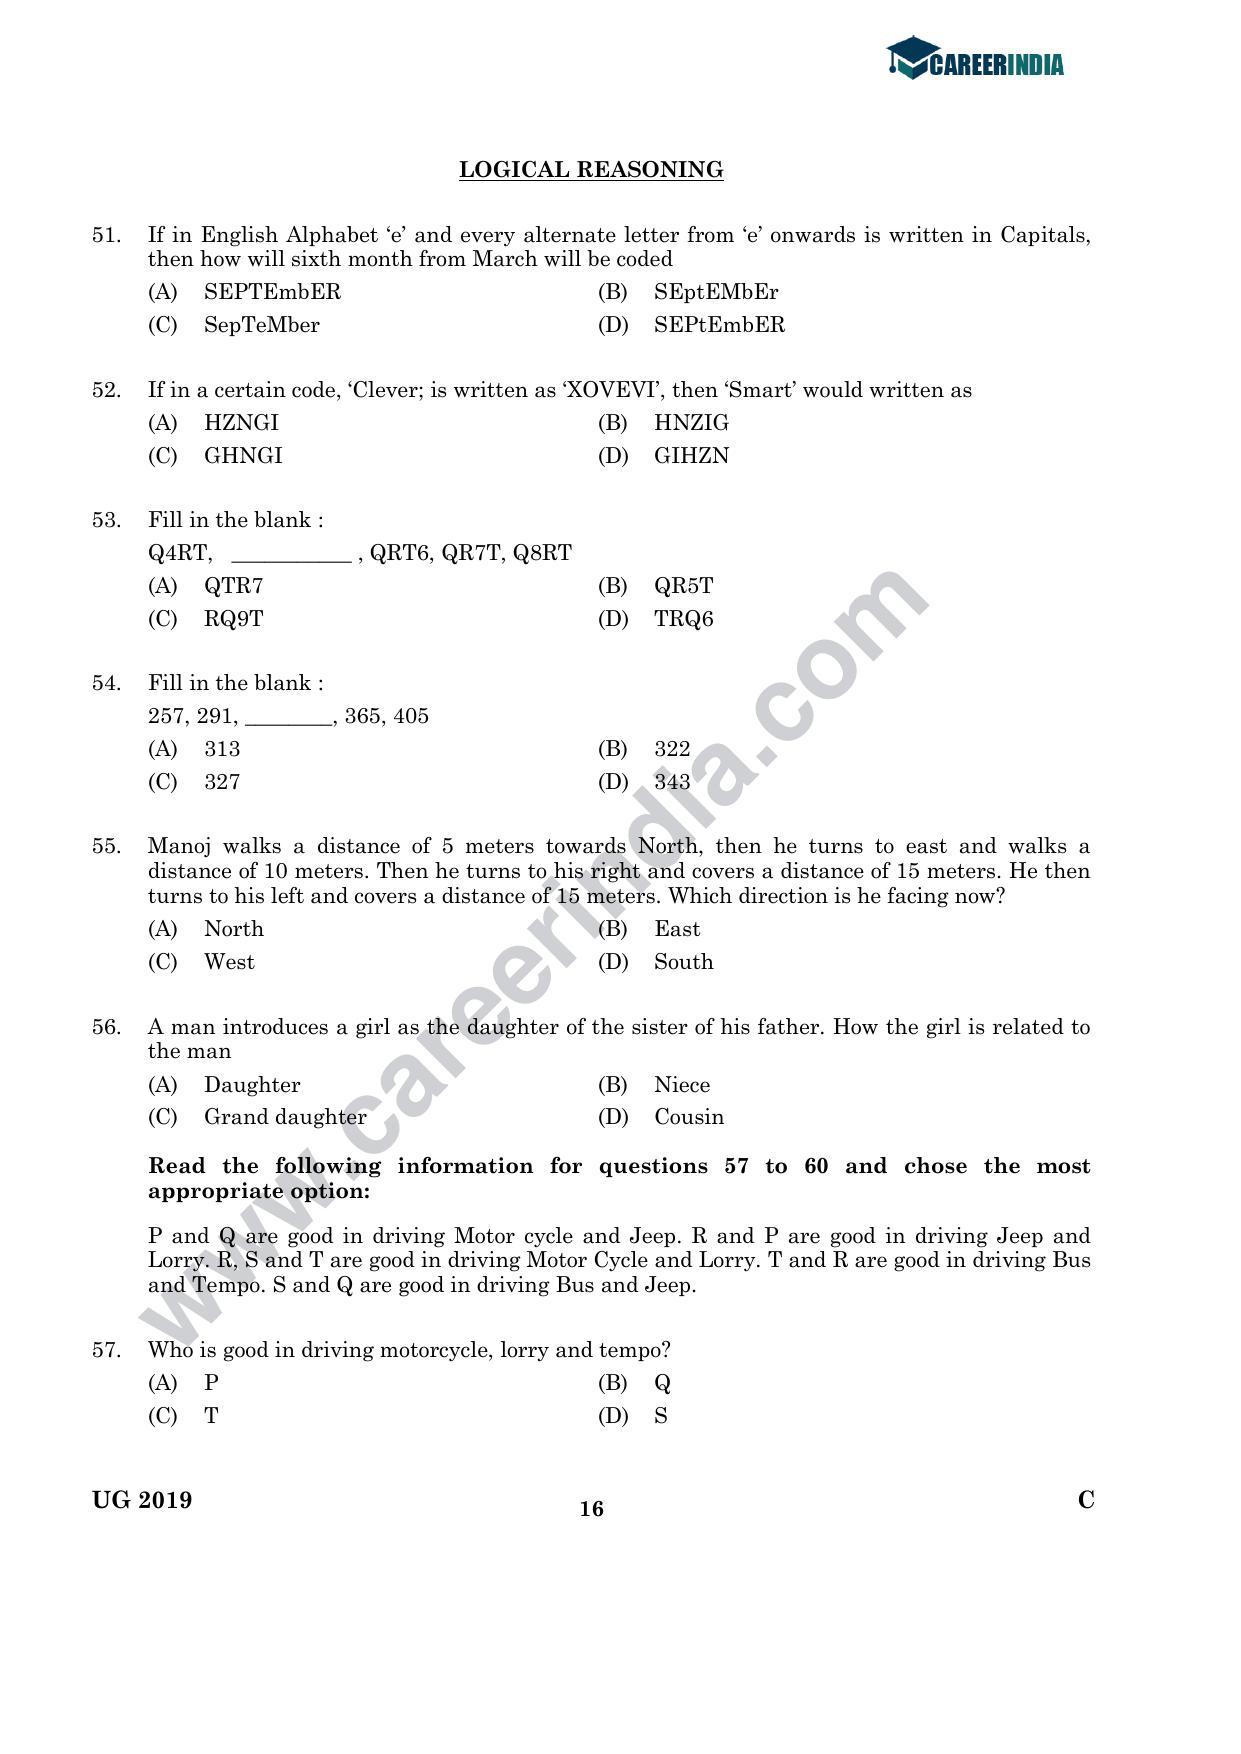 CLAT 2019 UG Legal-Aptitude Question Paper - Page 15